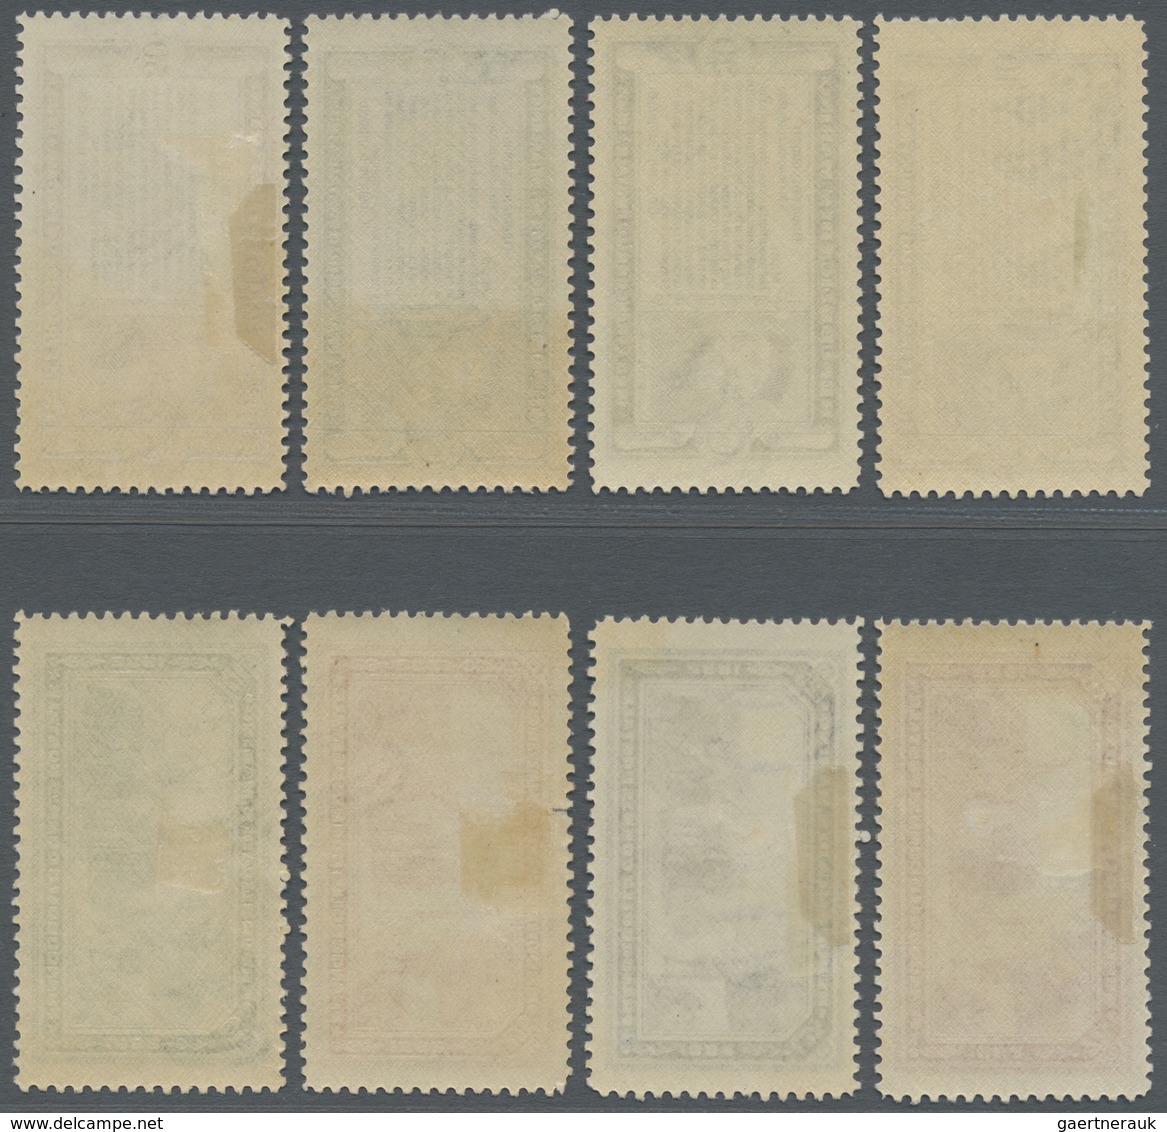 * San Marino: 1932, 10 C To 5 L Garibaldi Complete Set Mint, One Stamp With Gum Tint, Mi 1.300.- For M - Neufs